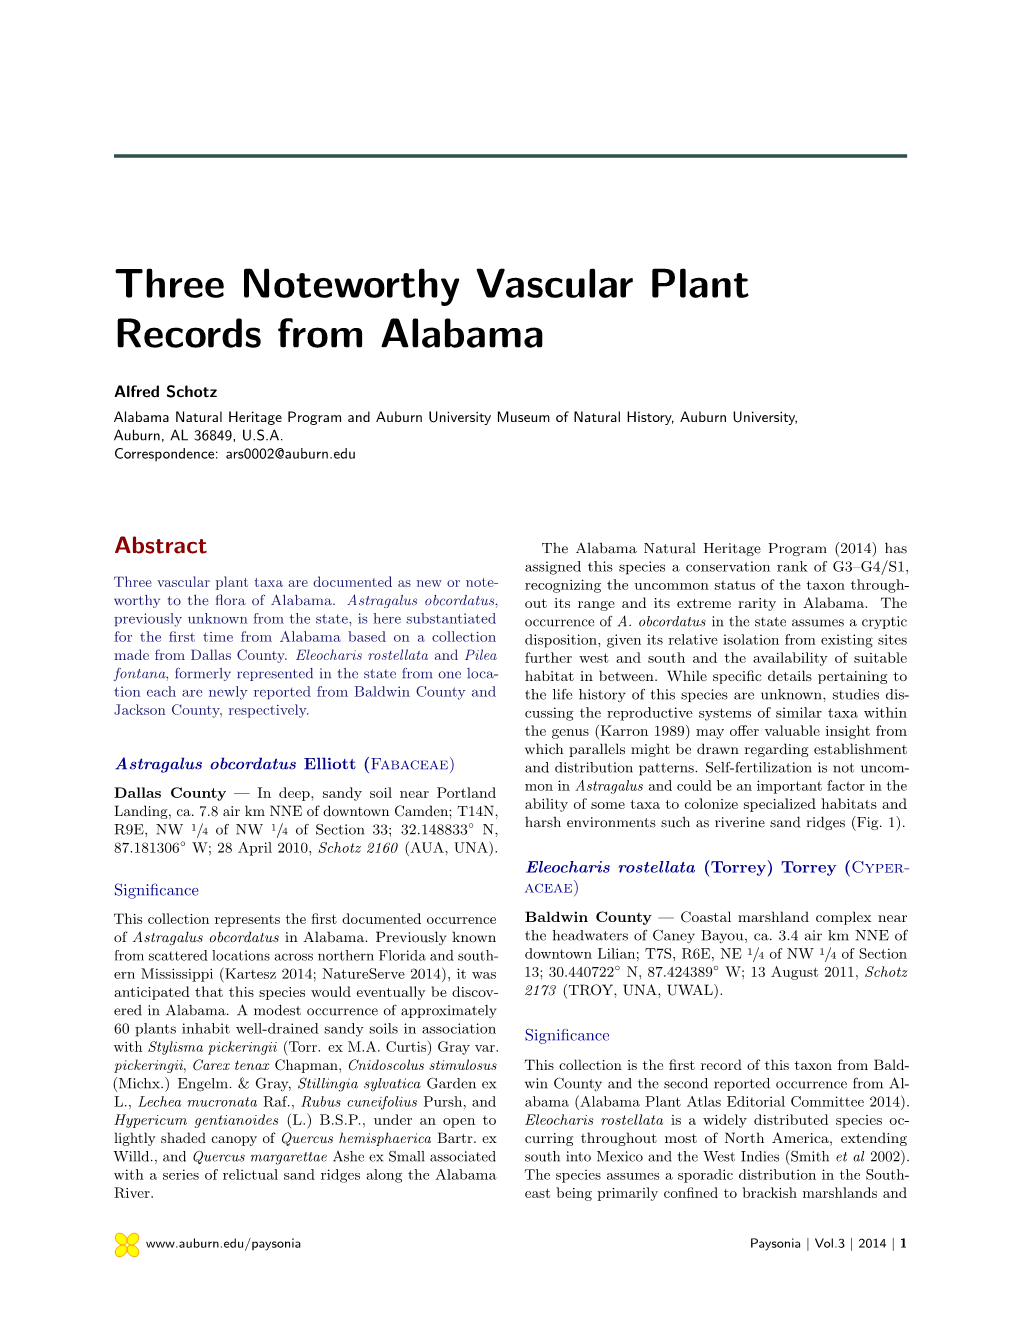 Three Noteworthy Vascular Plant Records from Alabama